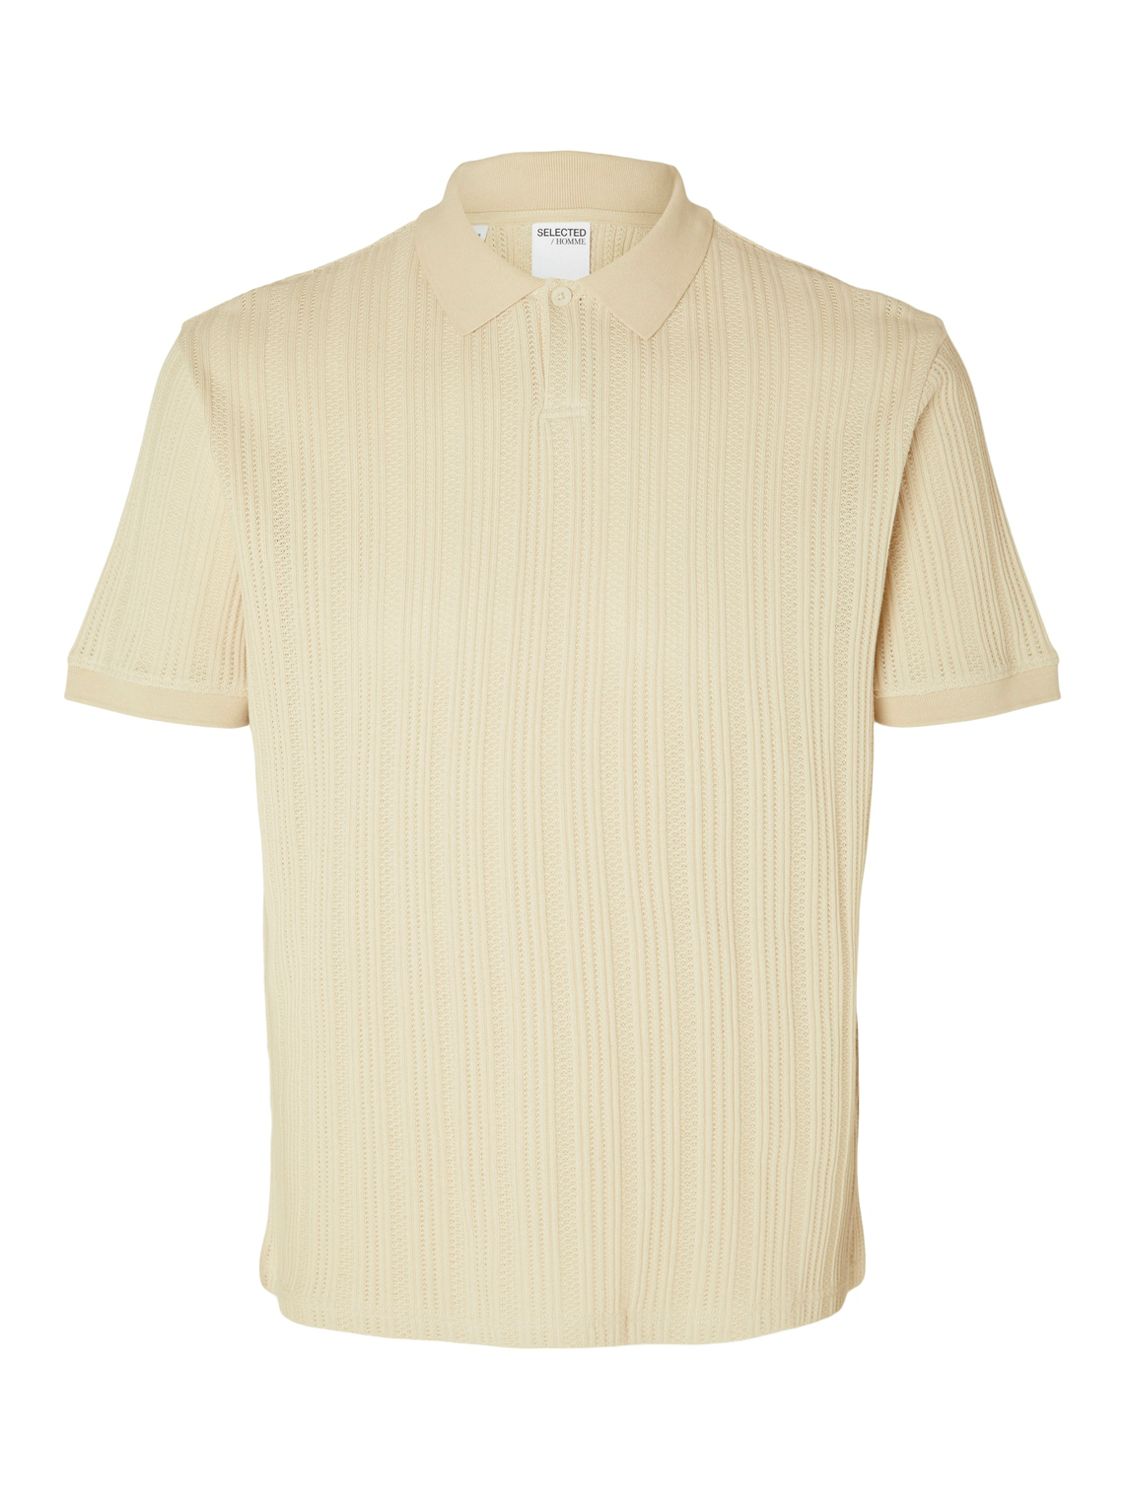 SELECTED HOMME Jaden Organic Cotton Jacquard Polo Shirt, Fog, S